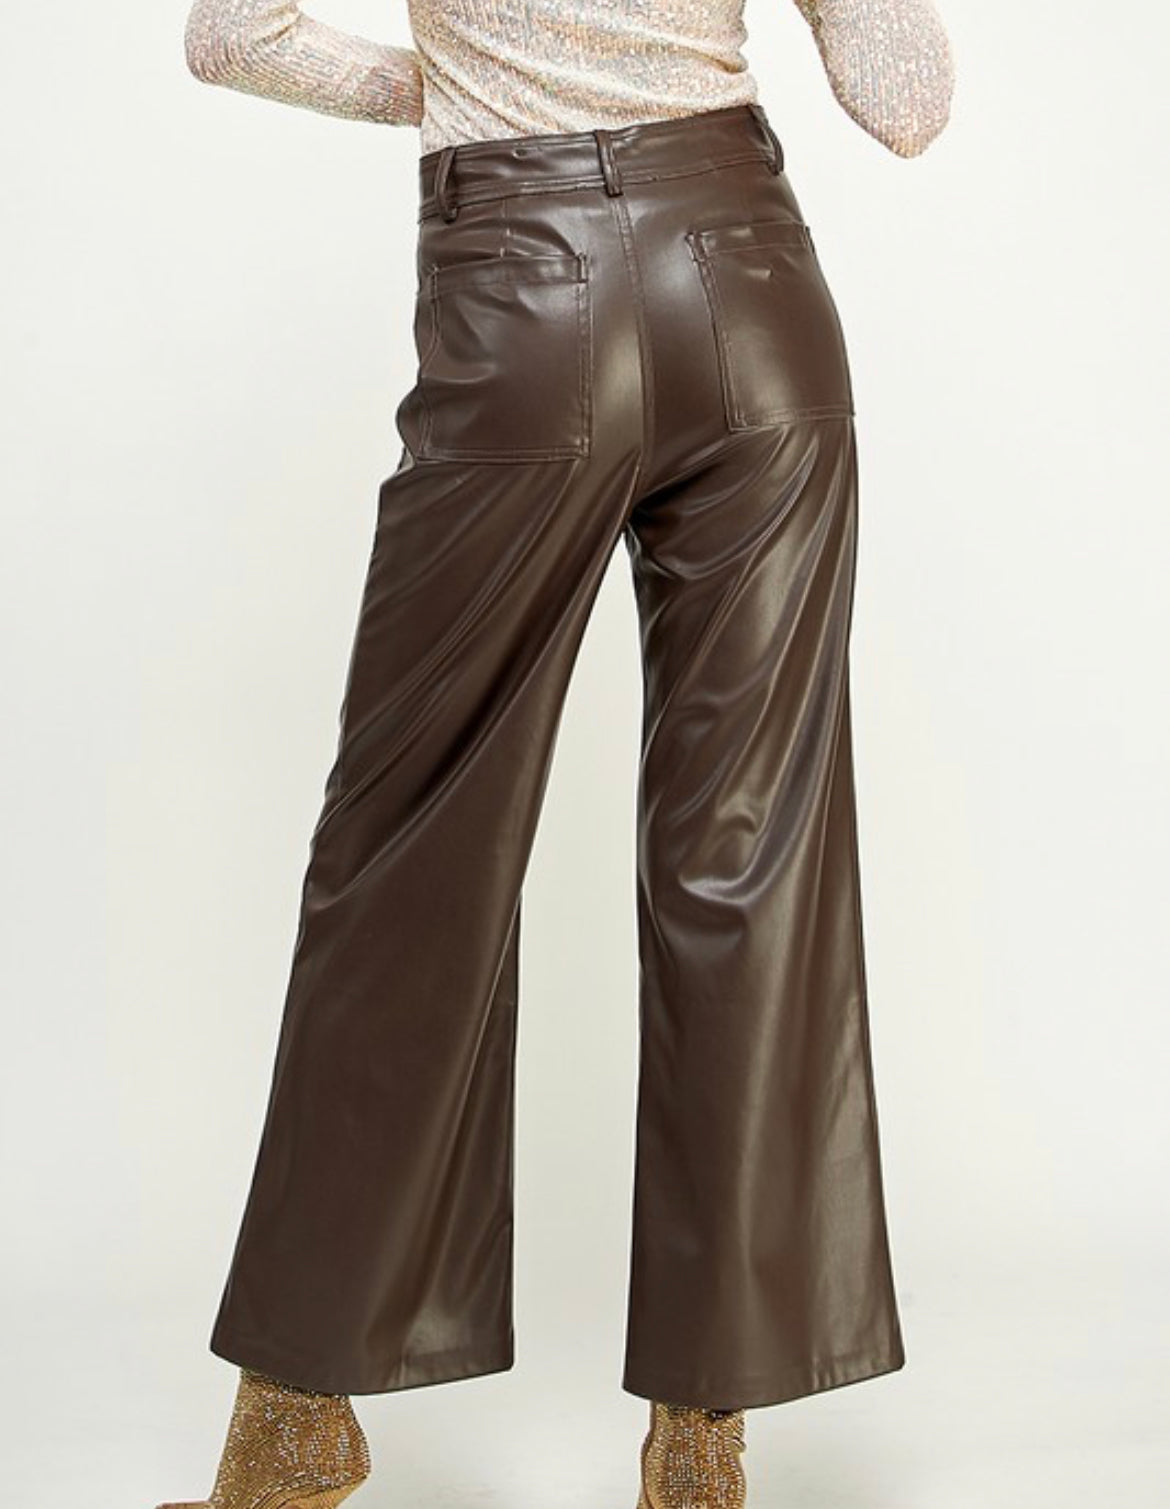 Faux marine leather pants